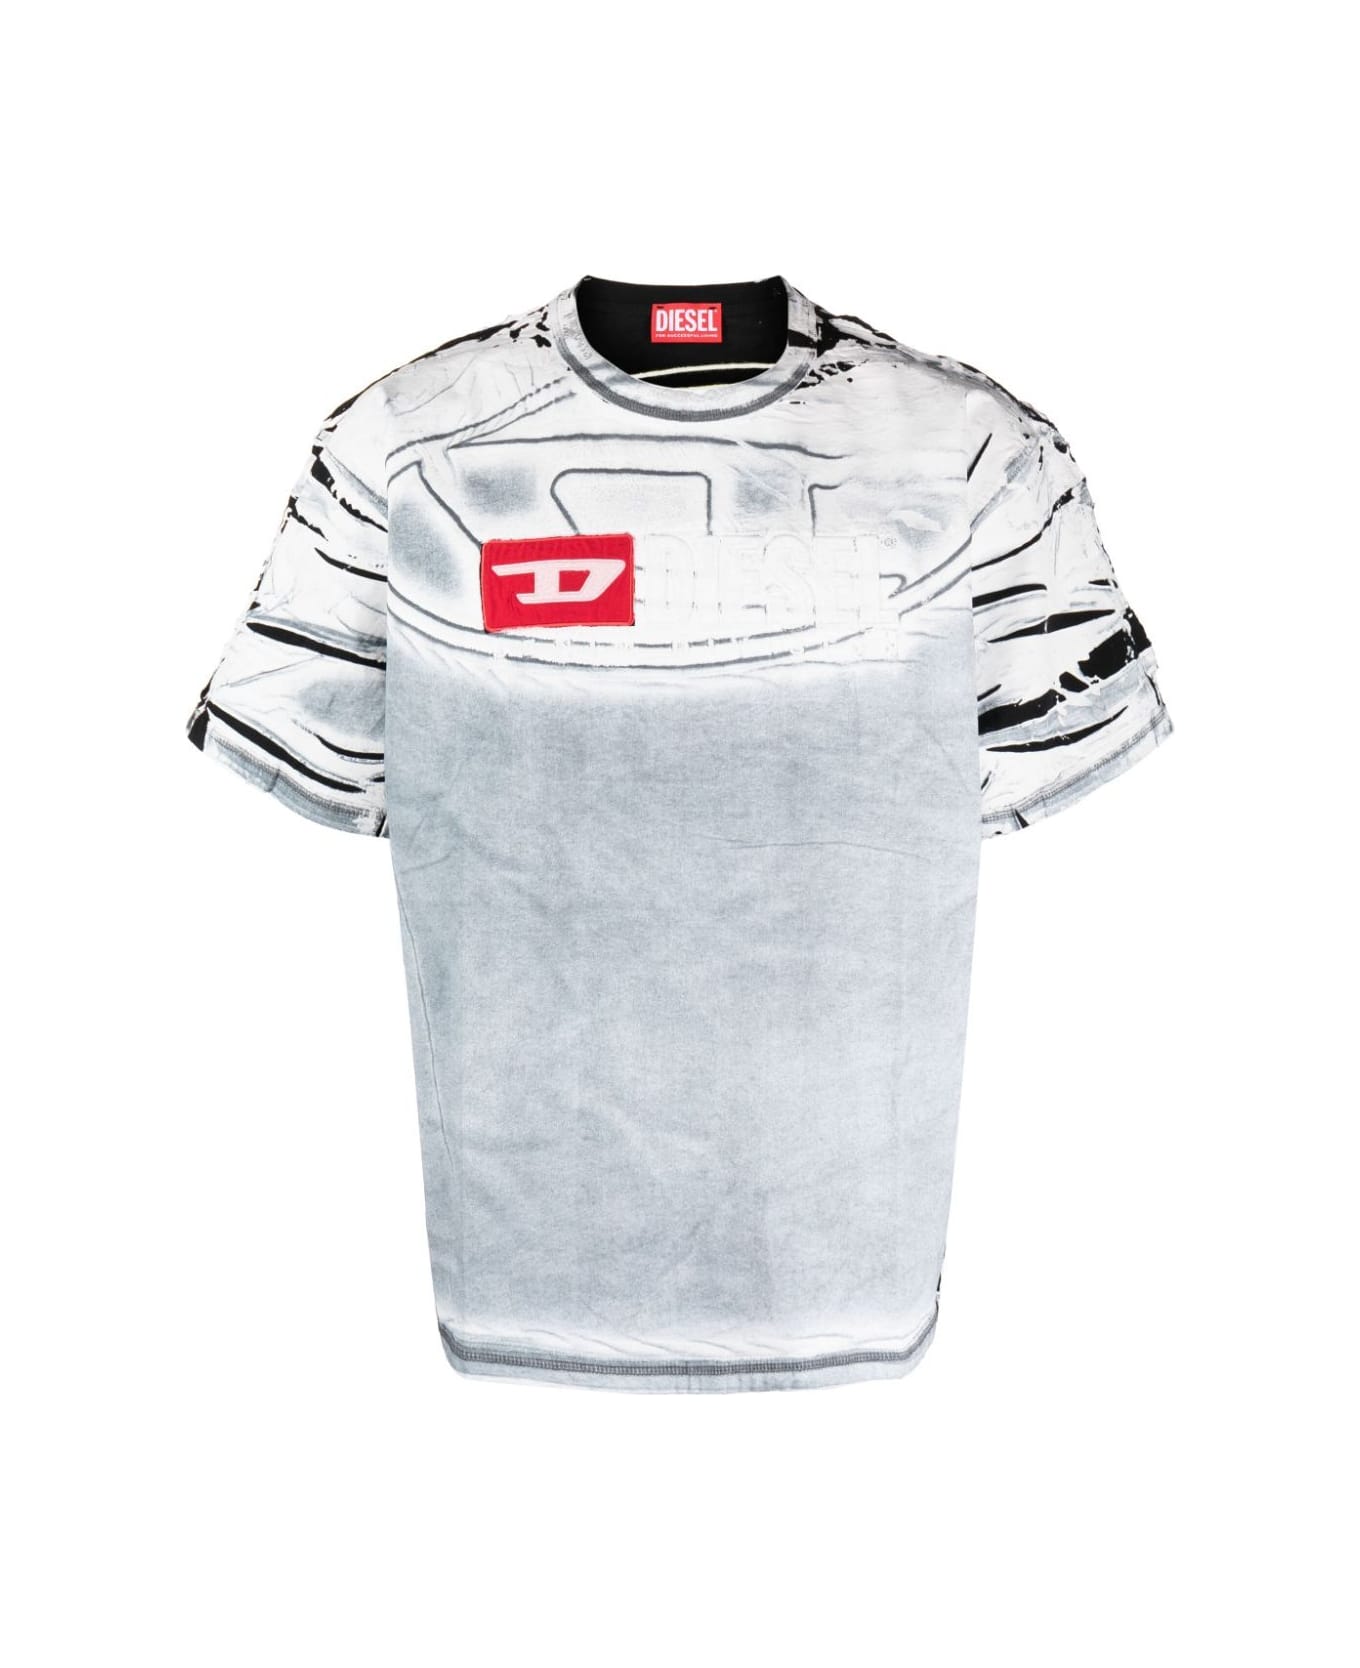 Diesel Ox T-shirt - A White Multi シャツ